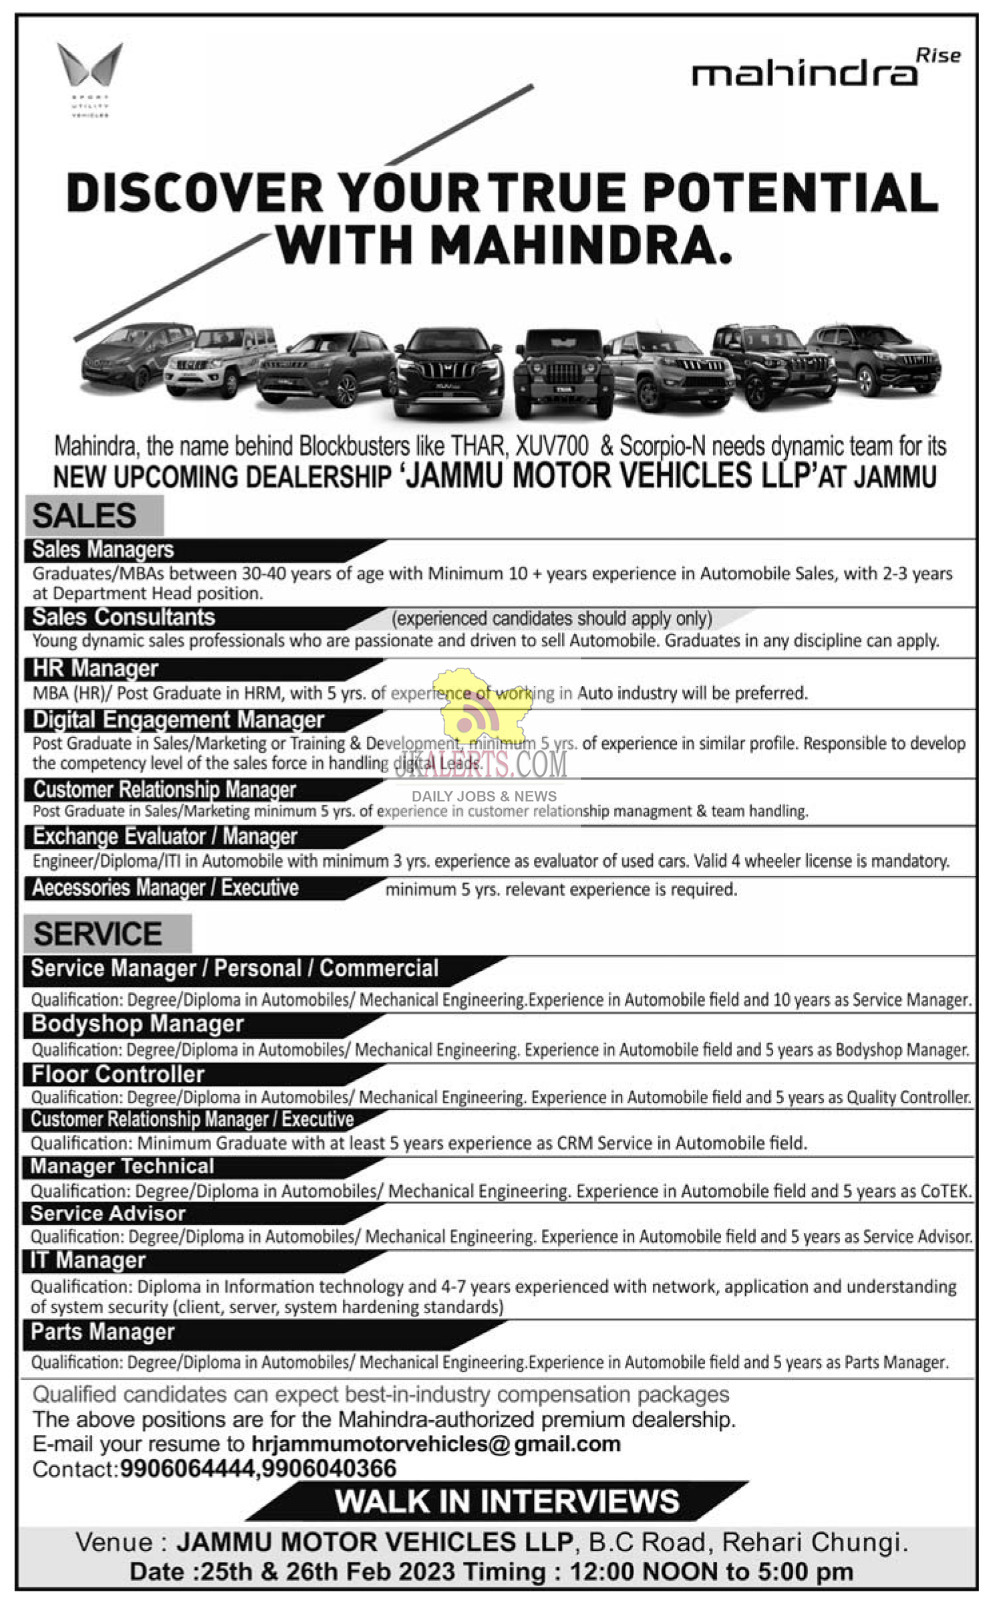 Jobs in Jammu motor vehicles